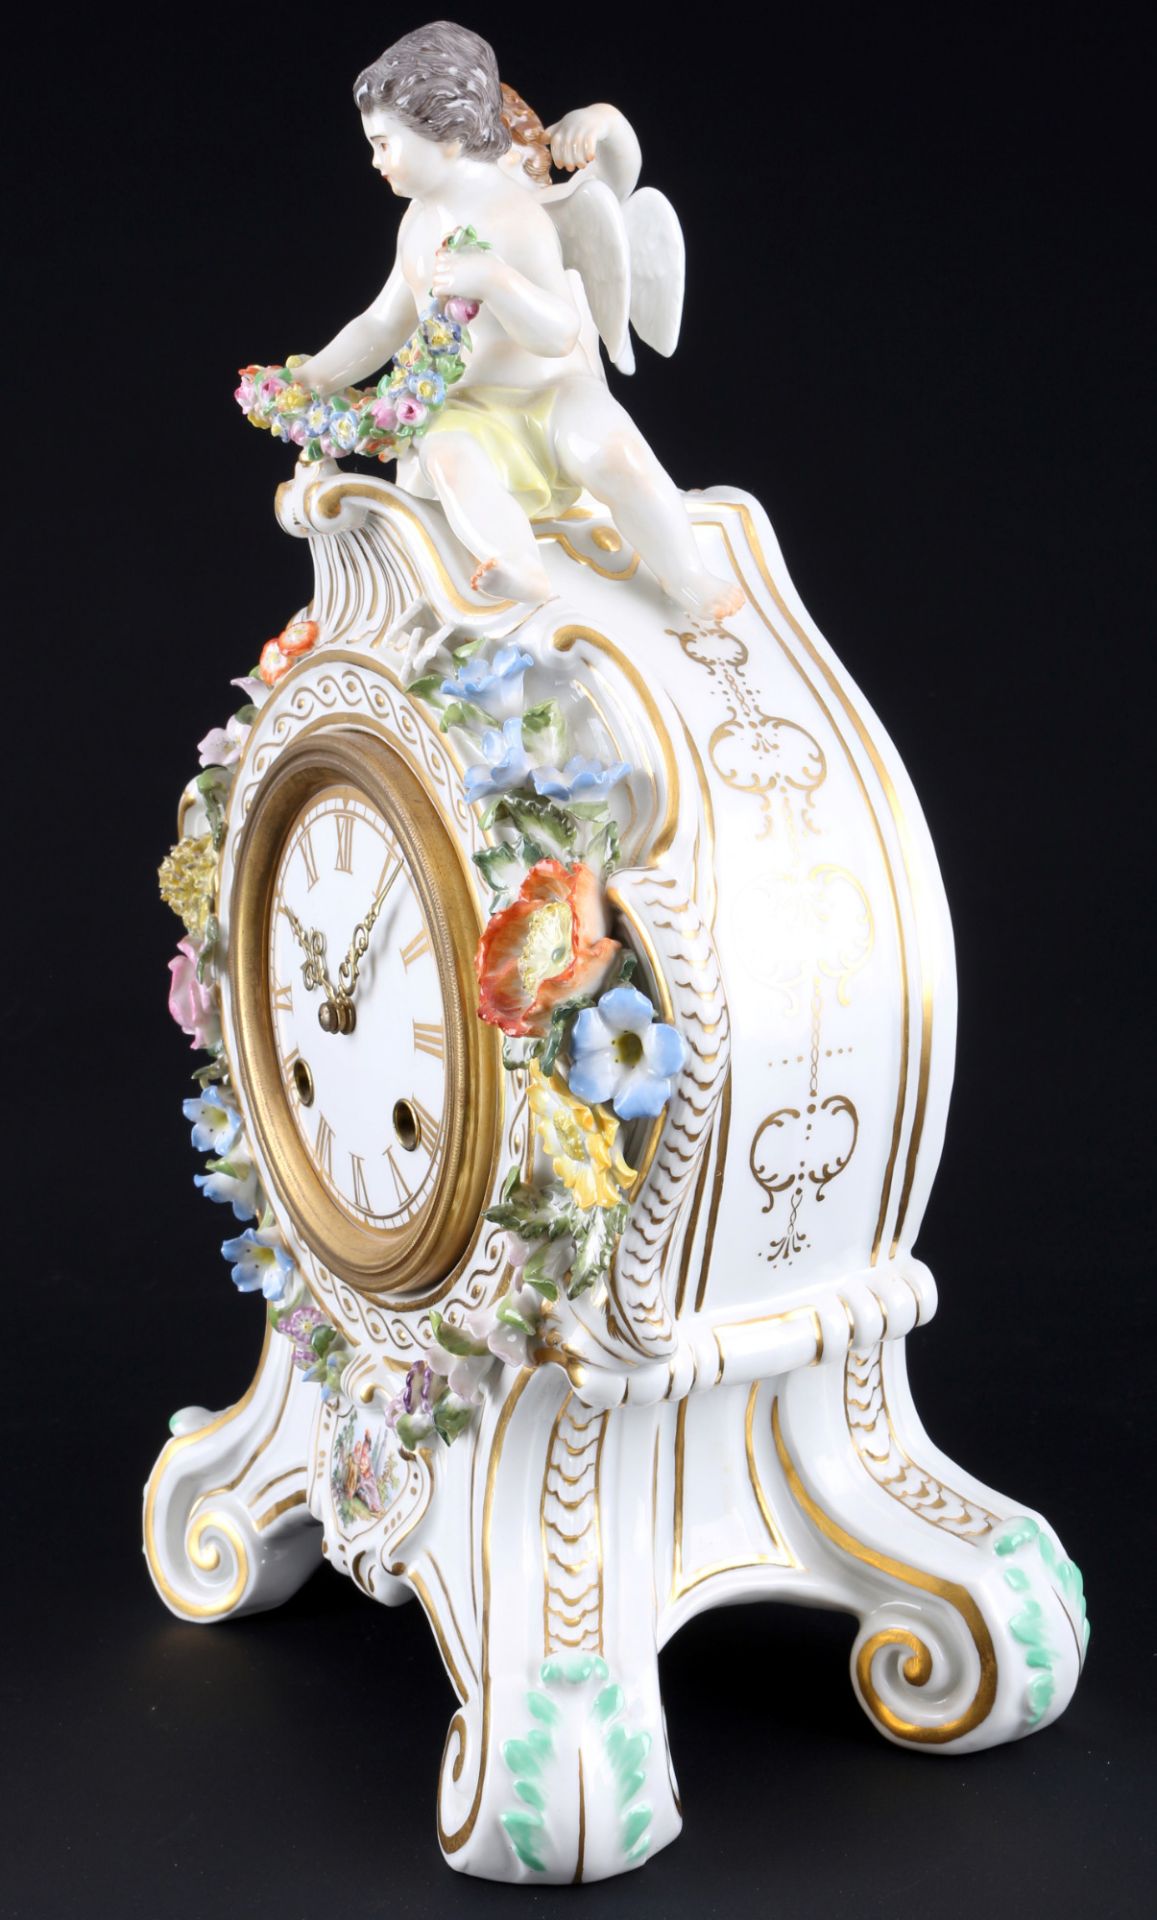 Meissen mantel clock with cherubs and flowers 1st choice - Ernst August LEUTERITZ, - Image 4 of 6